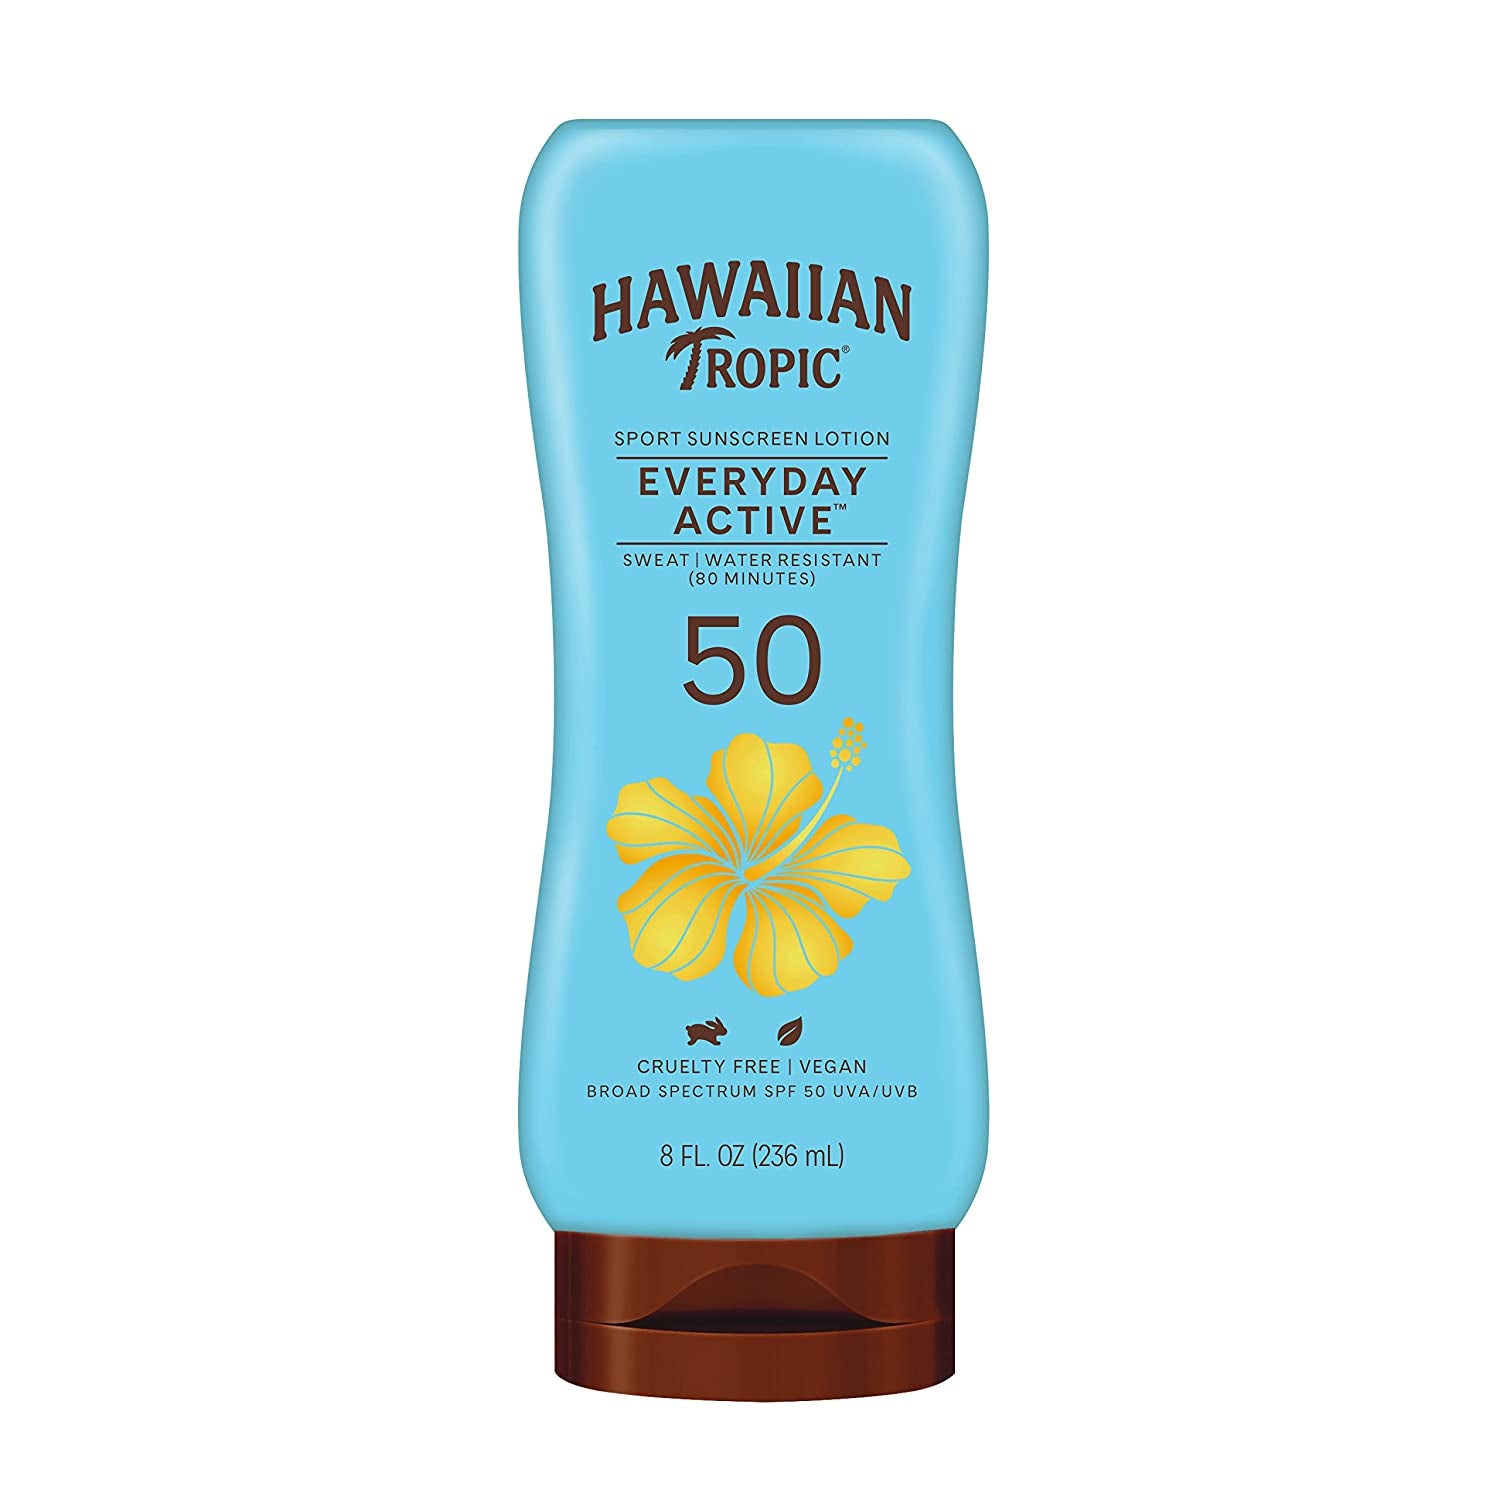 "Everyday Active Sun Protection: Hawaiian Tropic SPF 50 Lotion, 8oz"